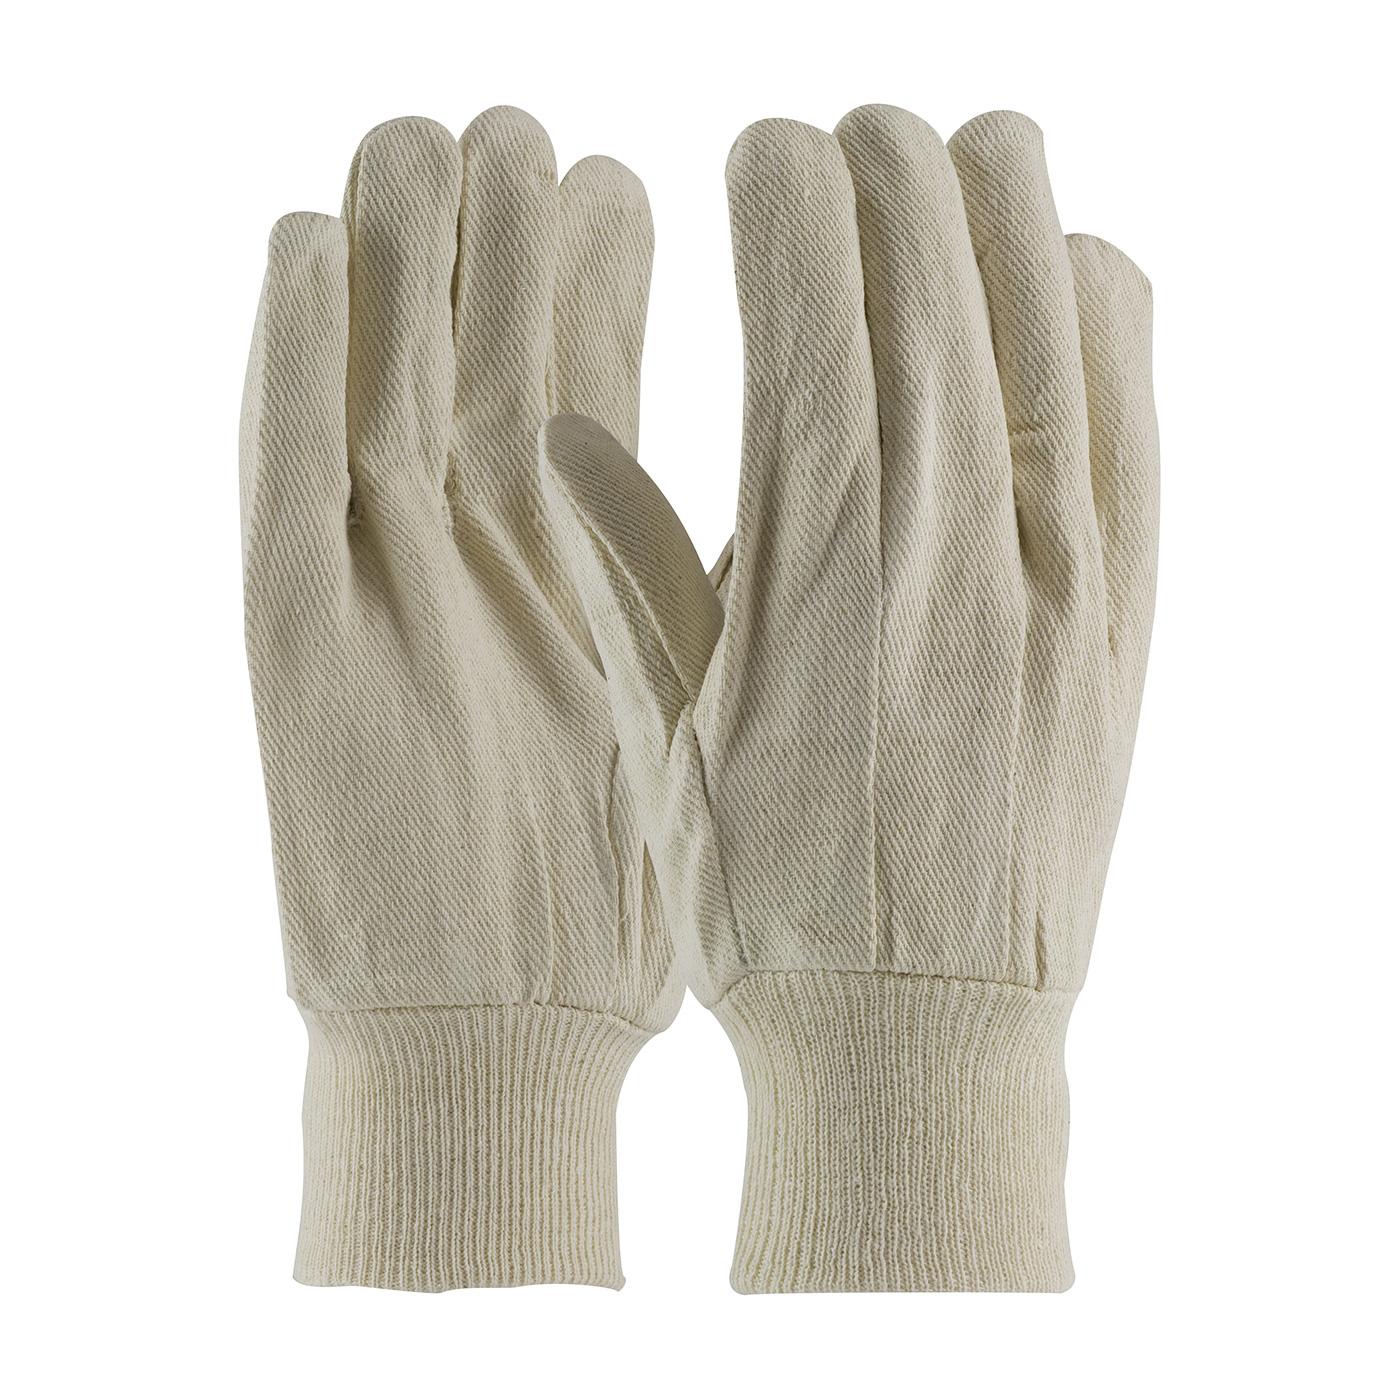 PIP 90-908I Economy Grade Cotton Canvas Single Palm Glove - Knitwrist PID-90 908I